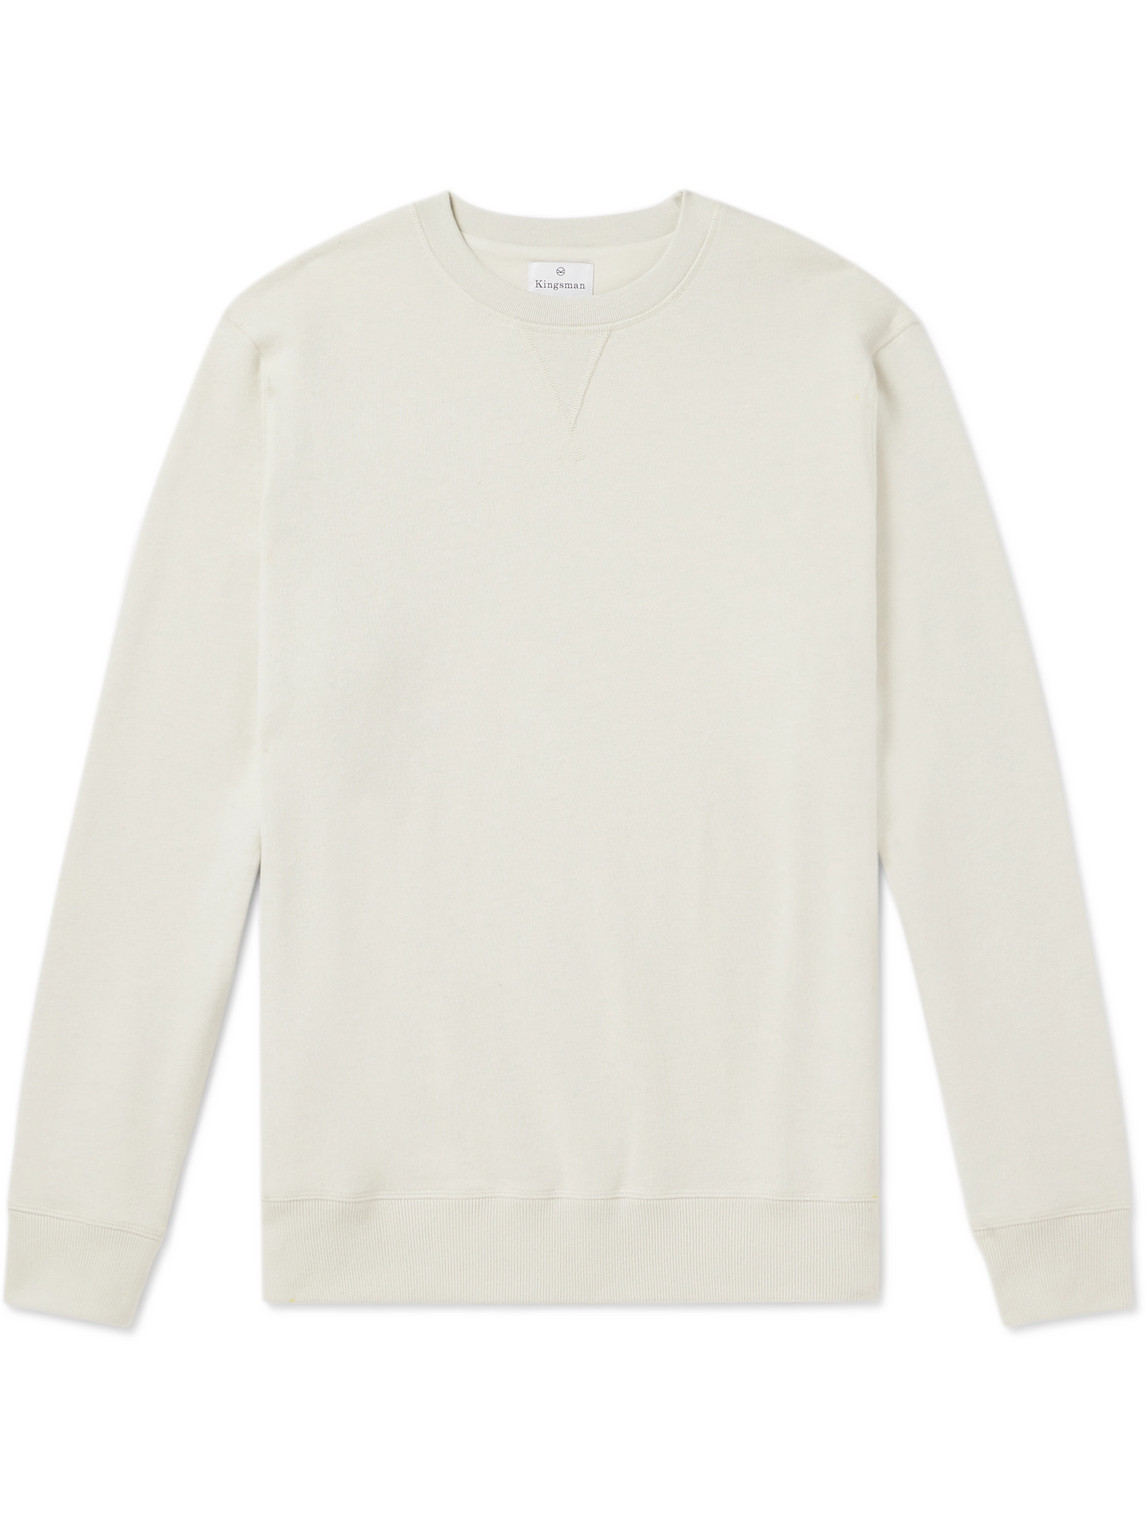 Kingsman Cotton And Cashmere-blend Jersey Sweatshirt In Neutrals